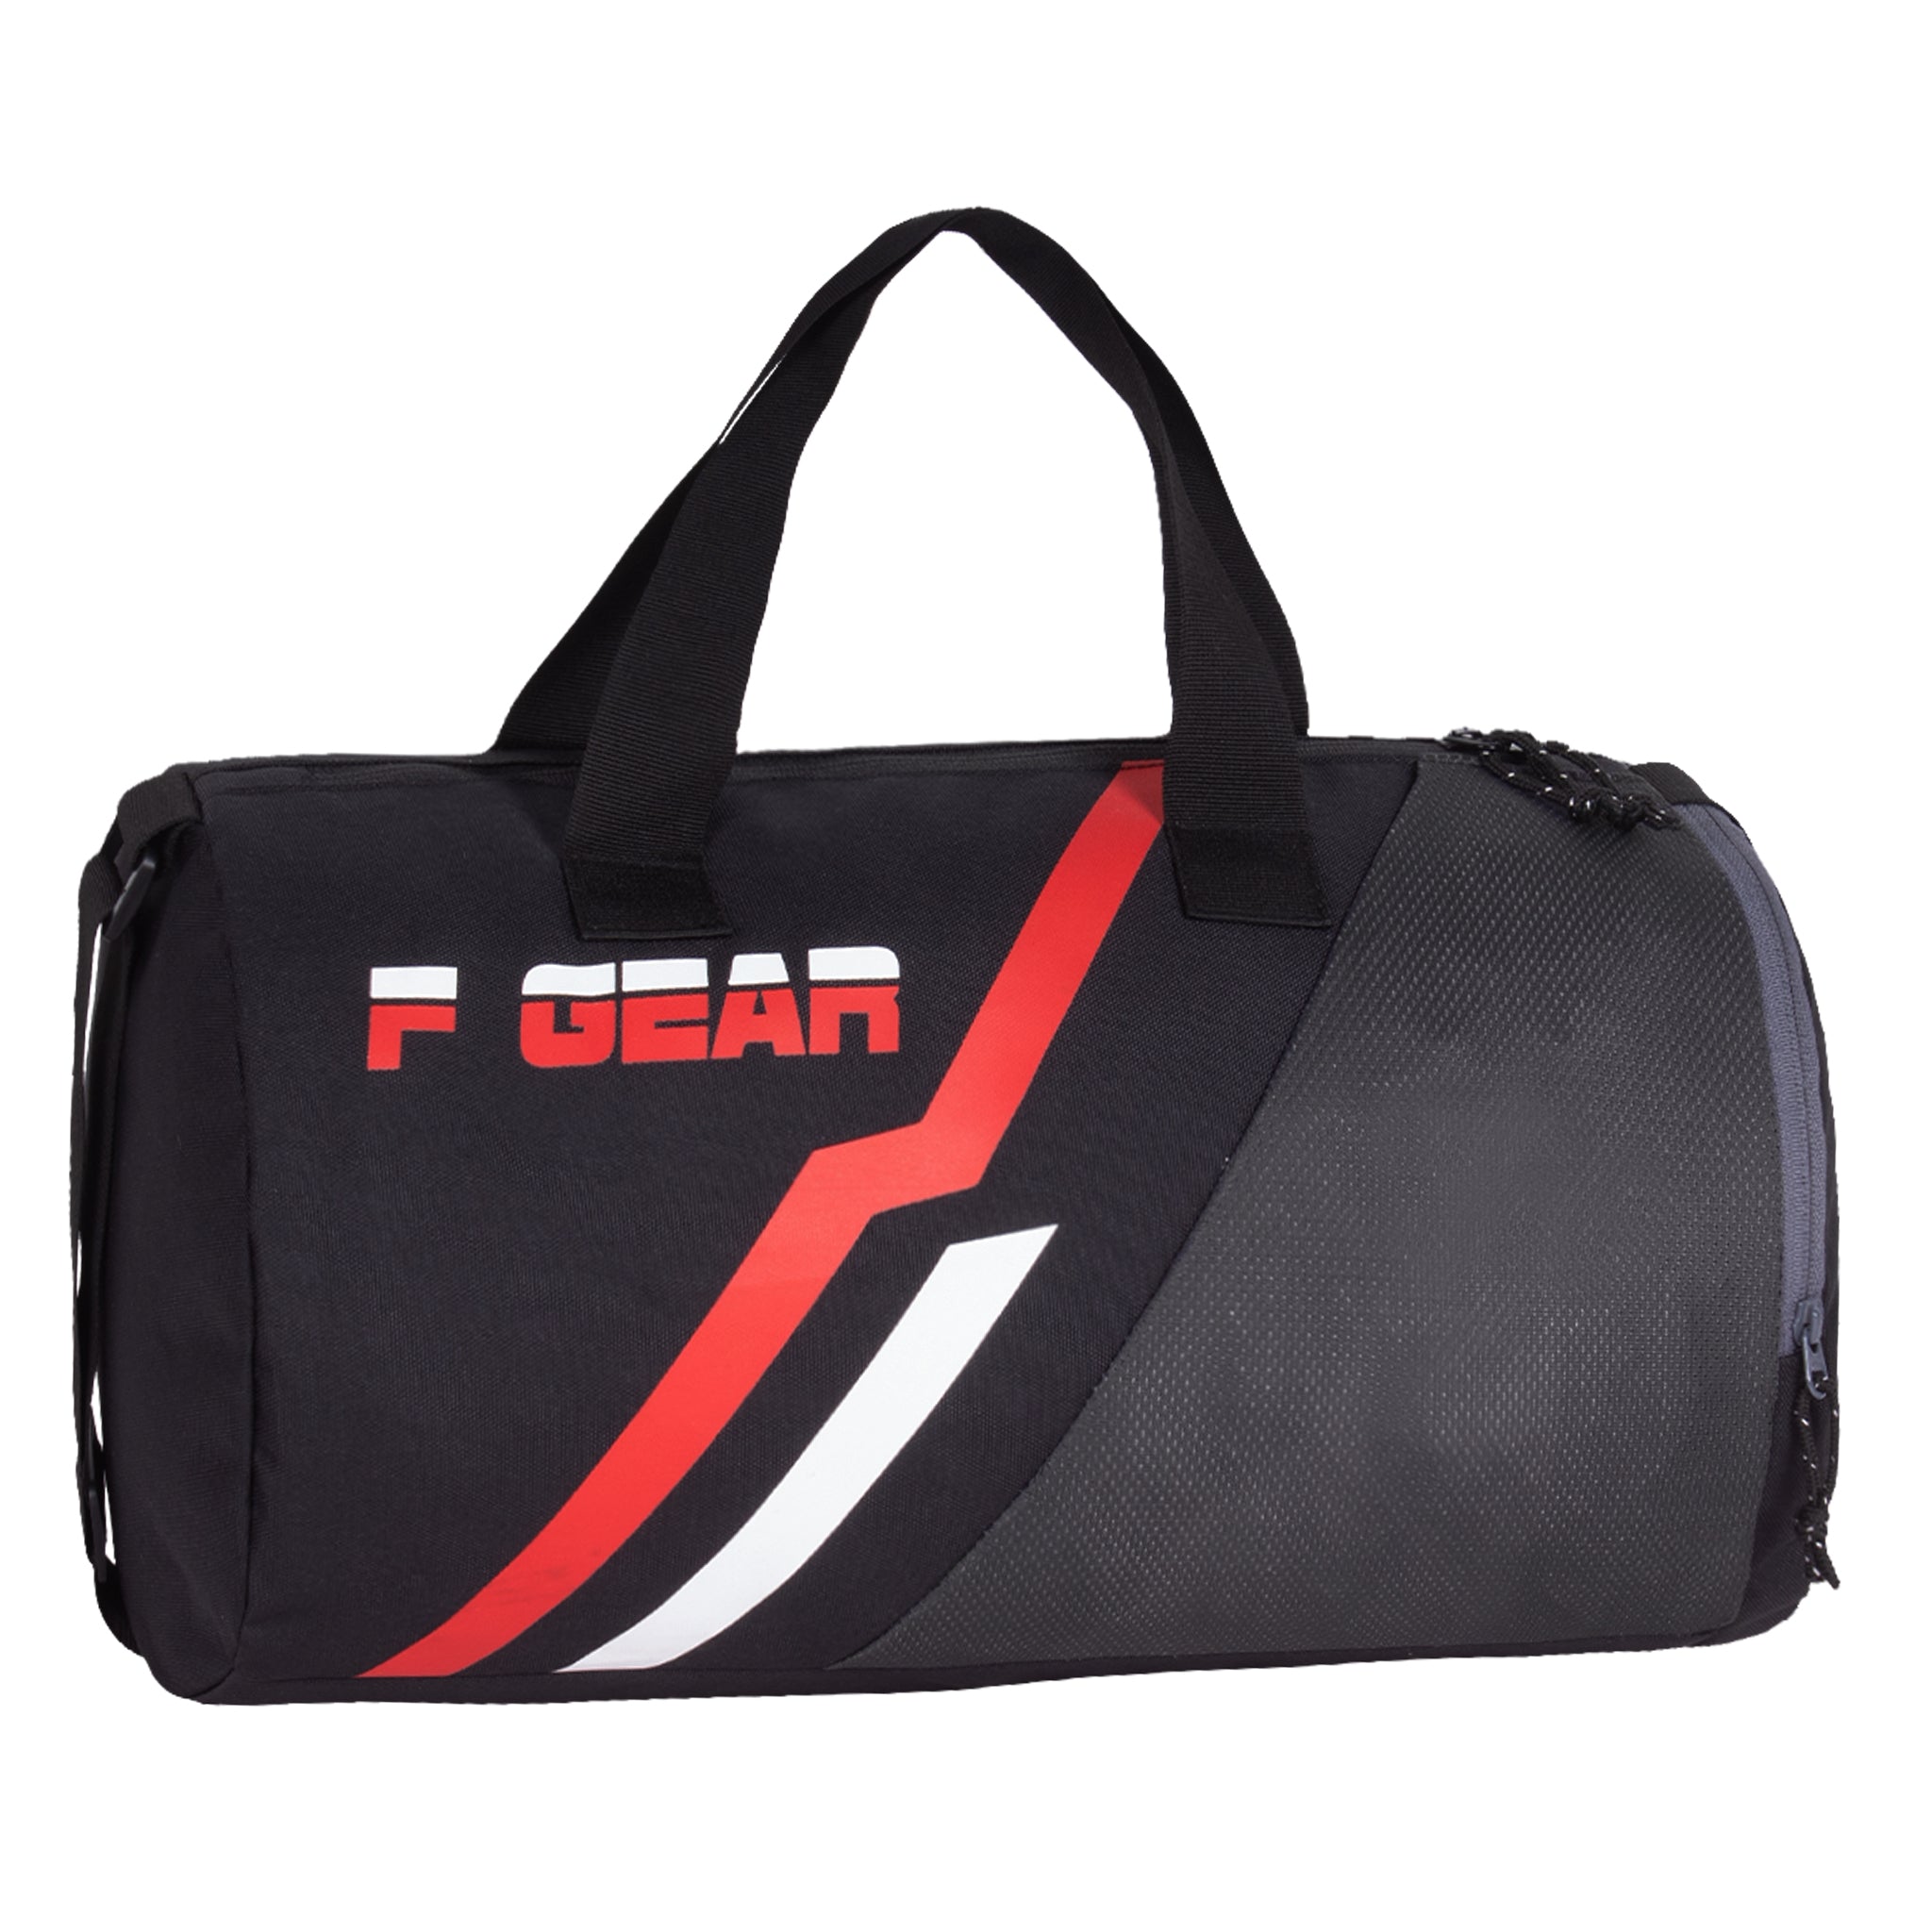 Uniworth's Duffle Bag is Perfect for Gym Gear & Weekend Getaways